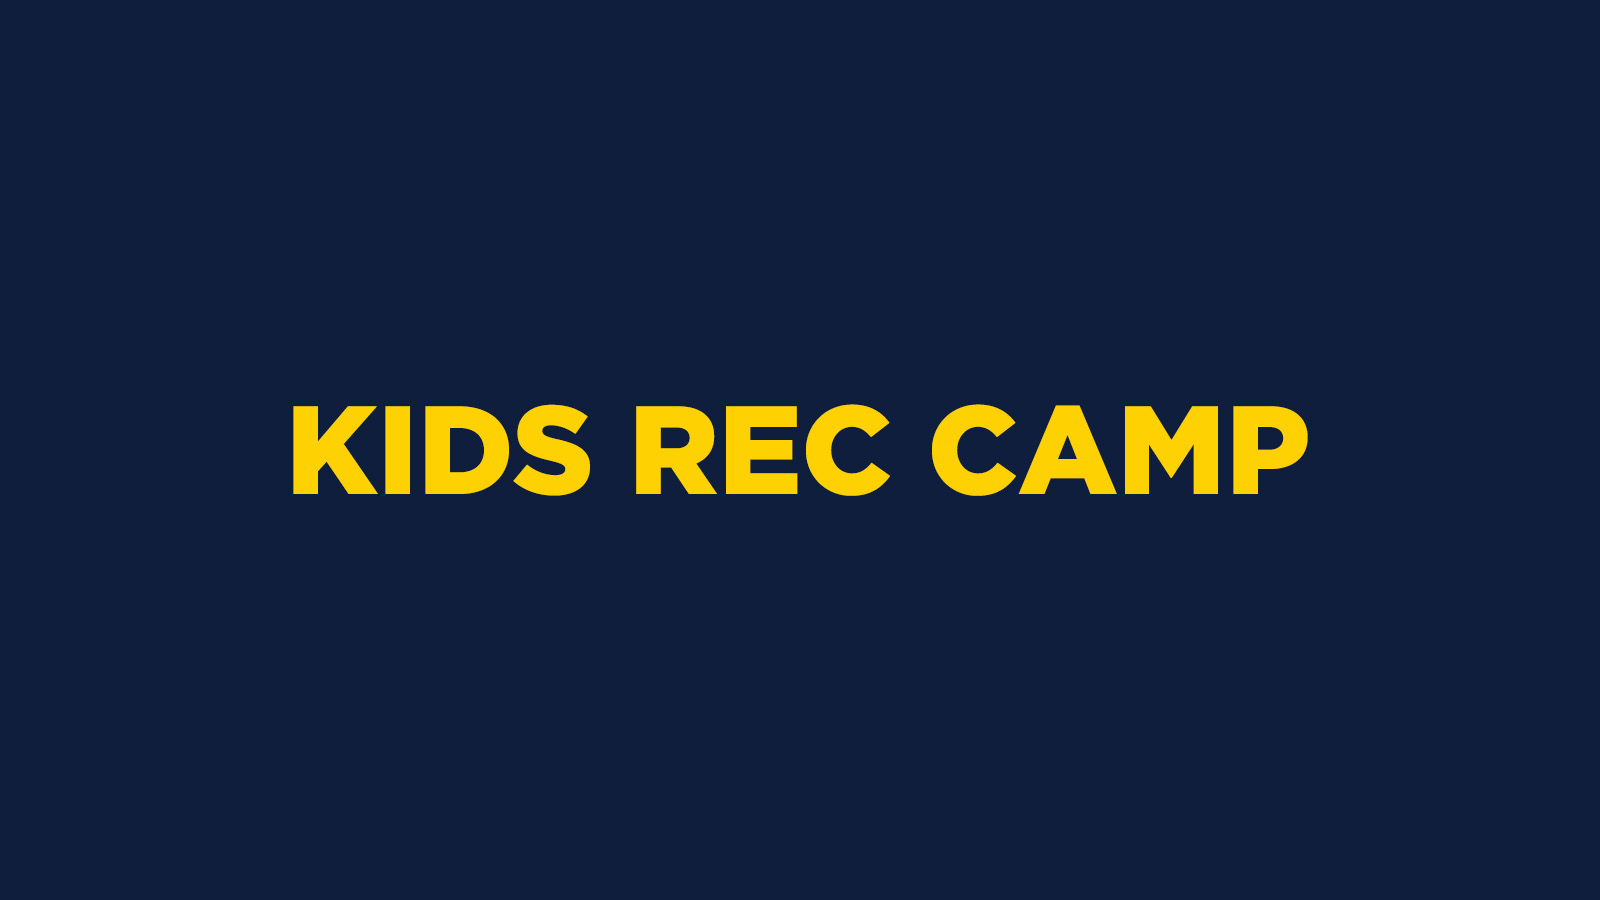 KIDS REC CAMP